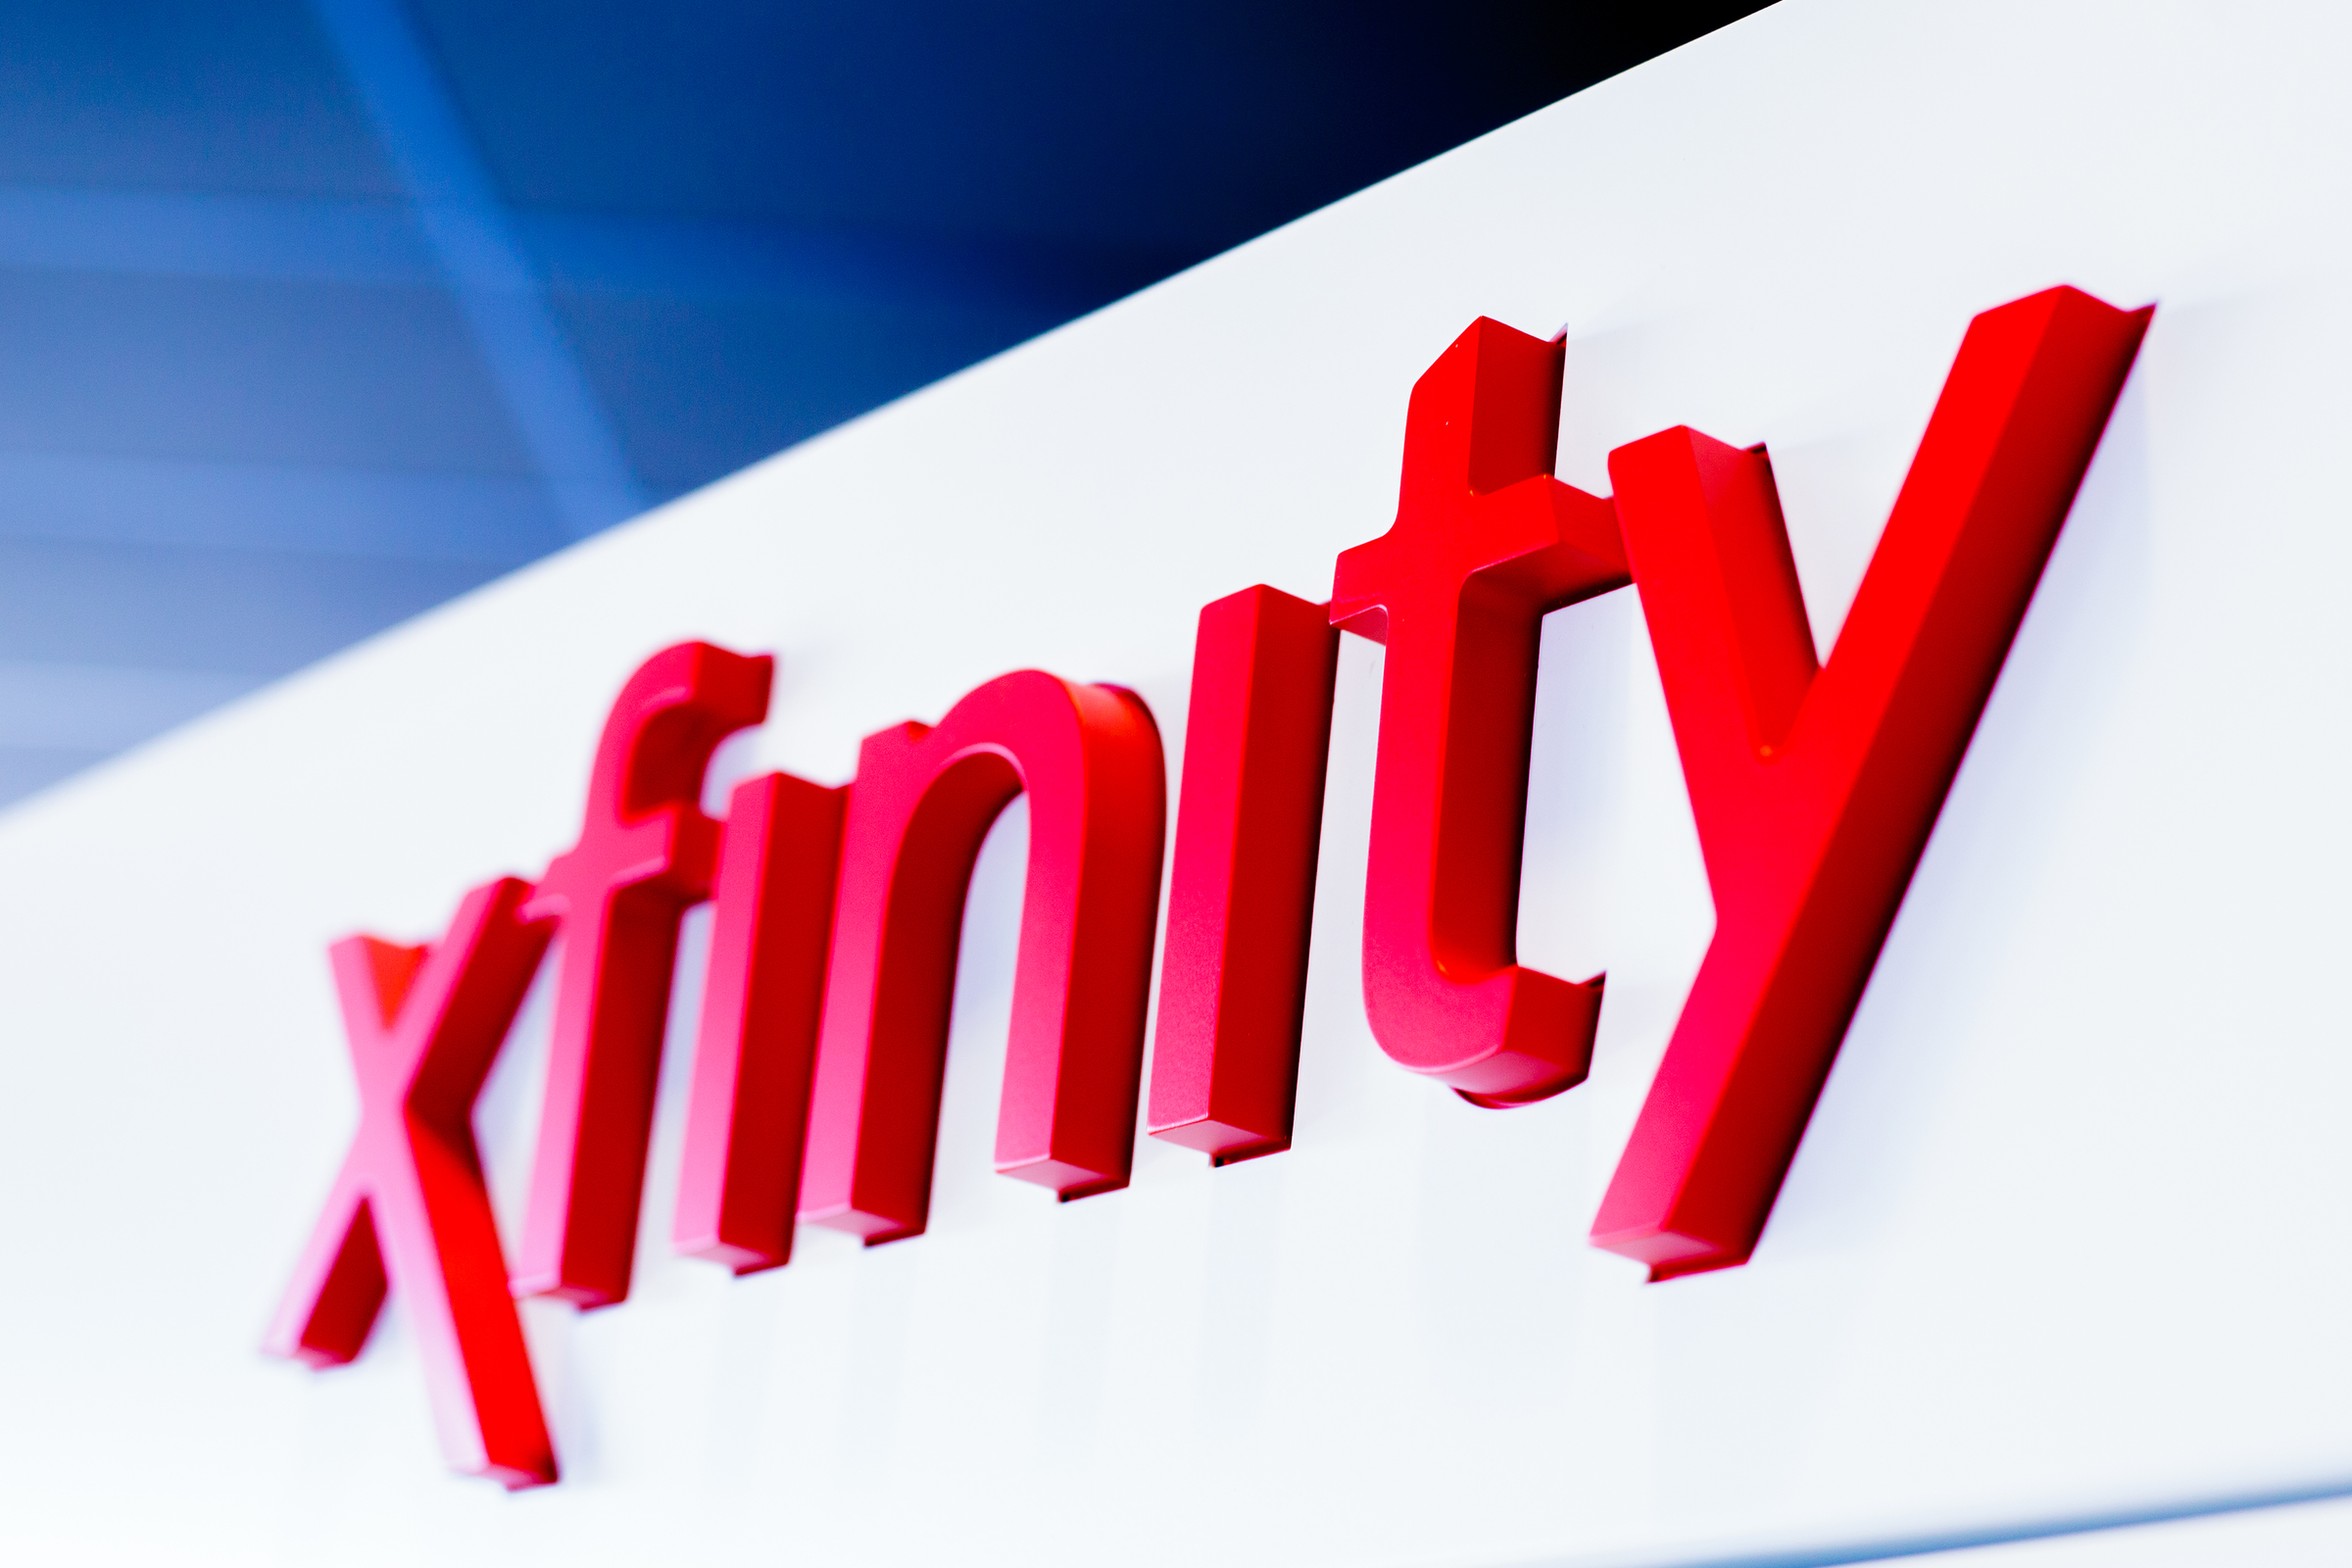 The Xfinity logo